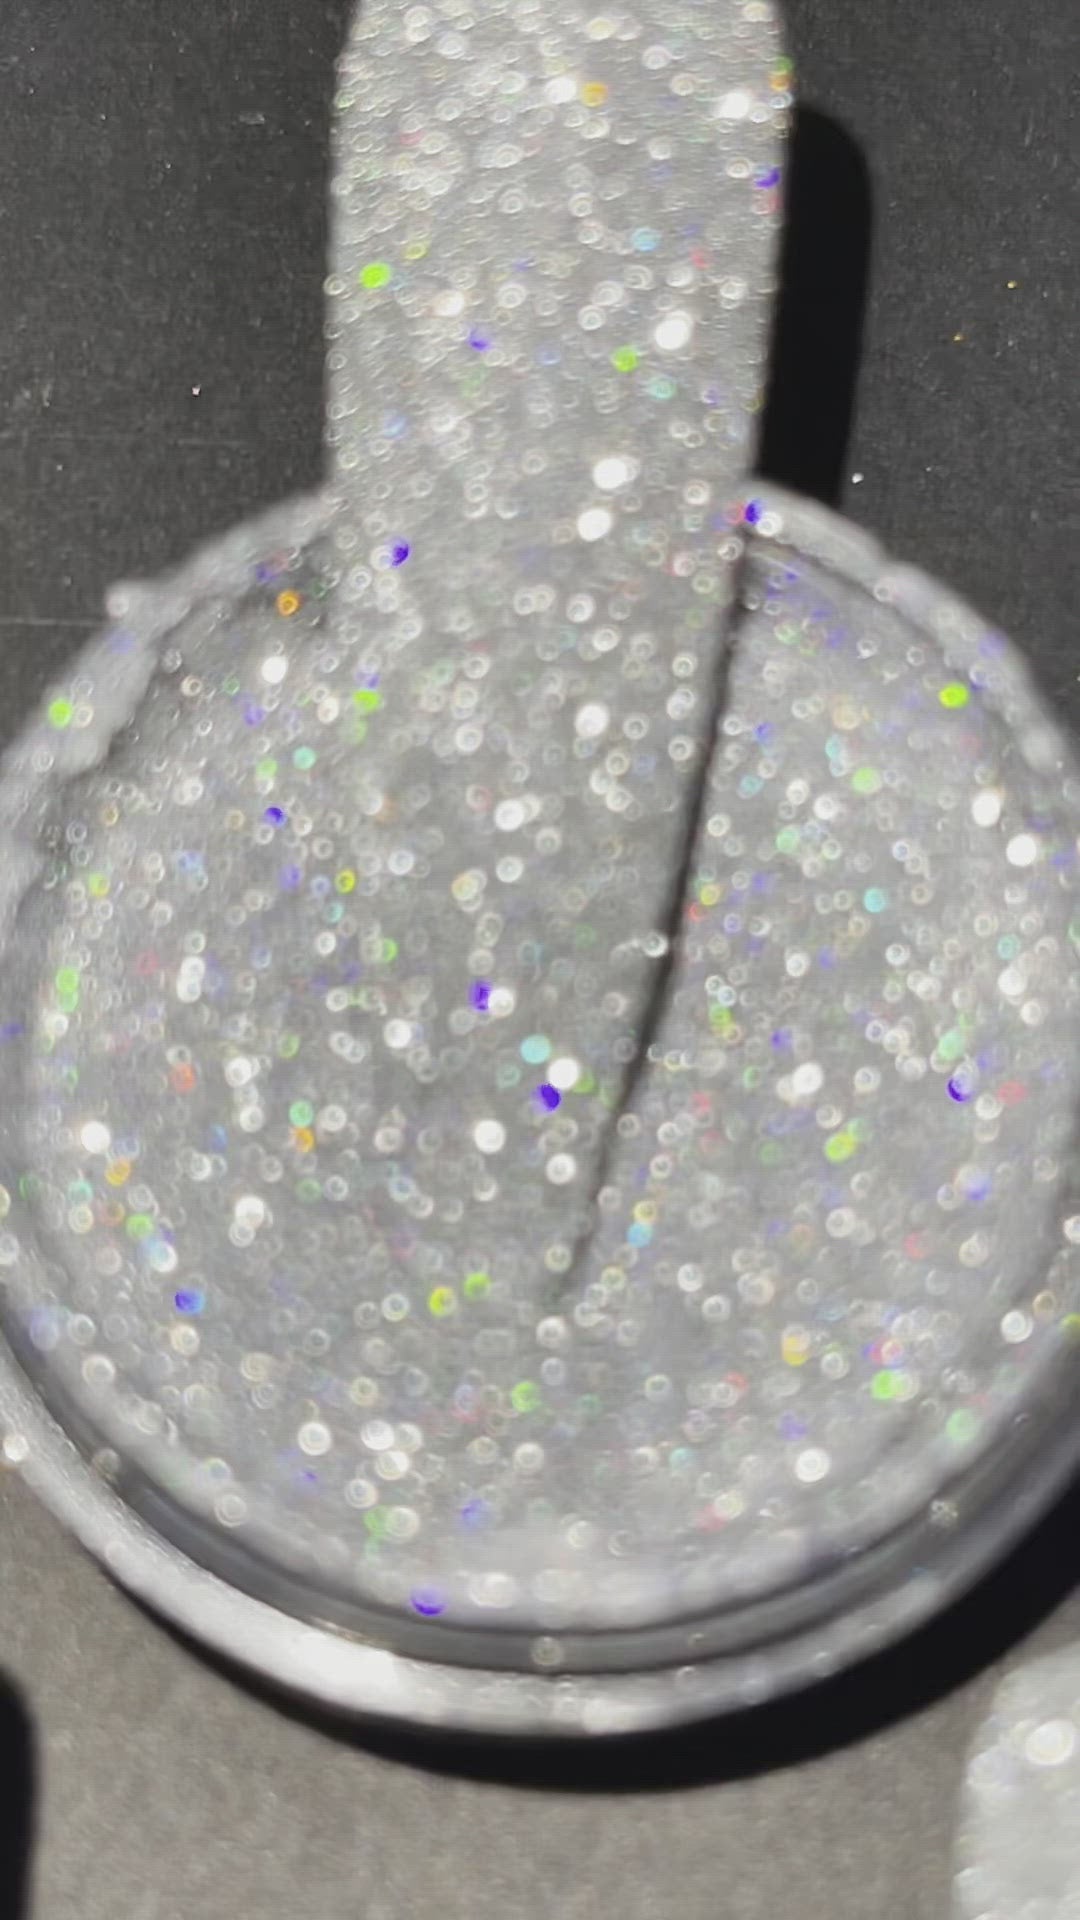 BOSSY Disco Reflective Dust Glitter Powder (2g) 01 VVS